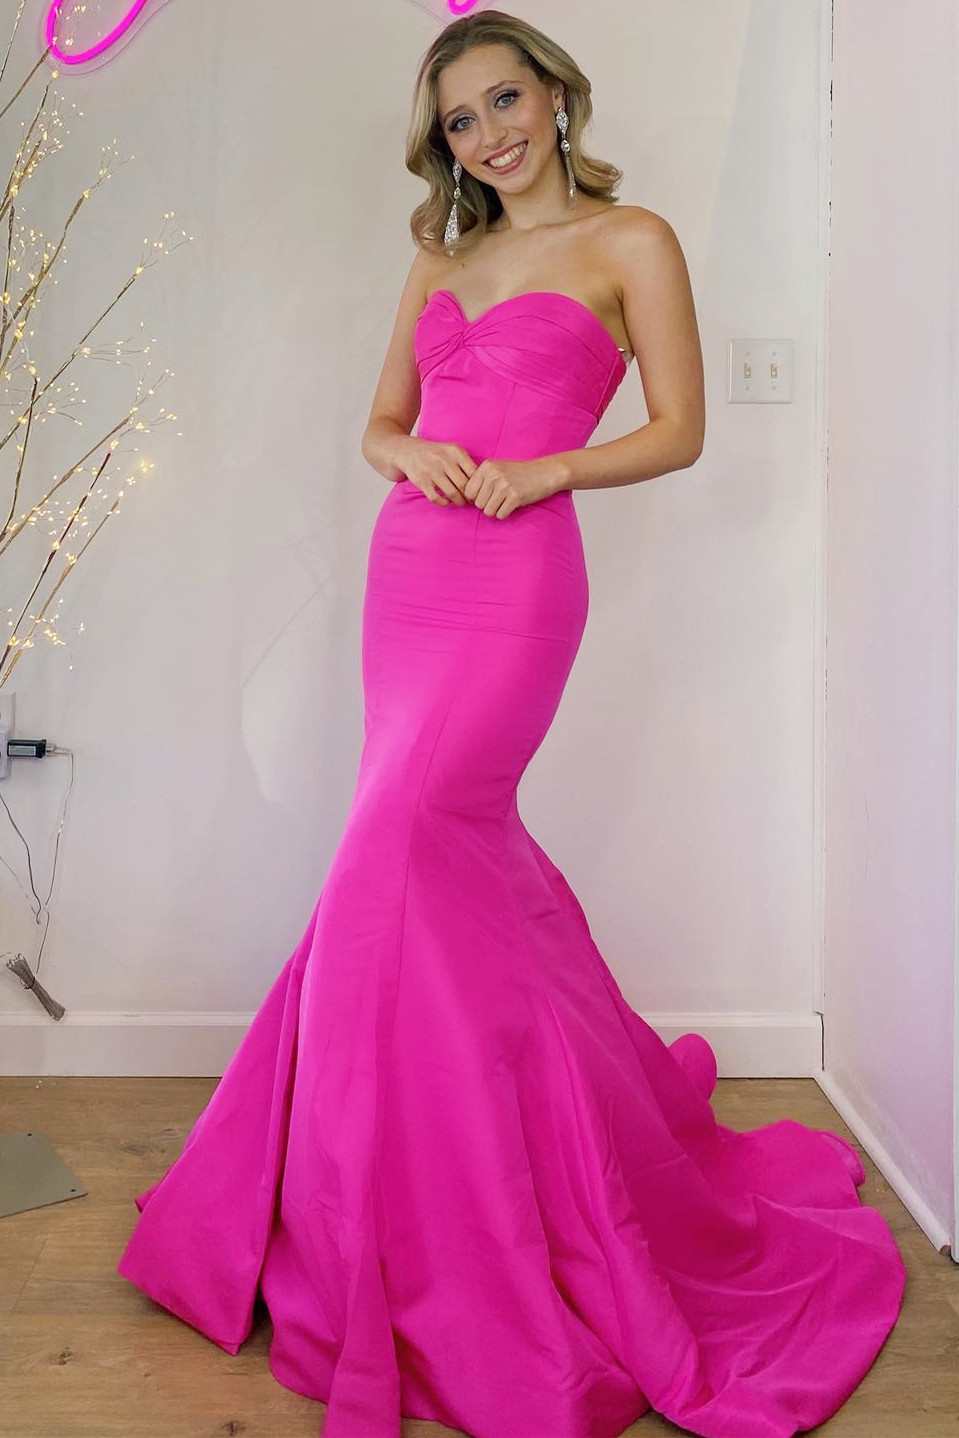 Hot Pink Sweetheart Trumpet Long Prom Dress